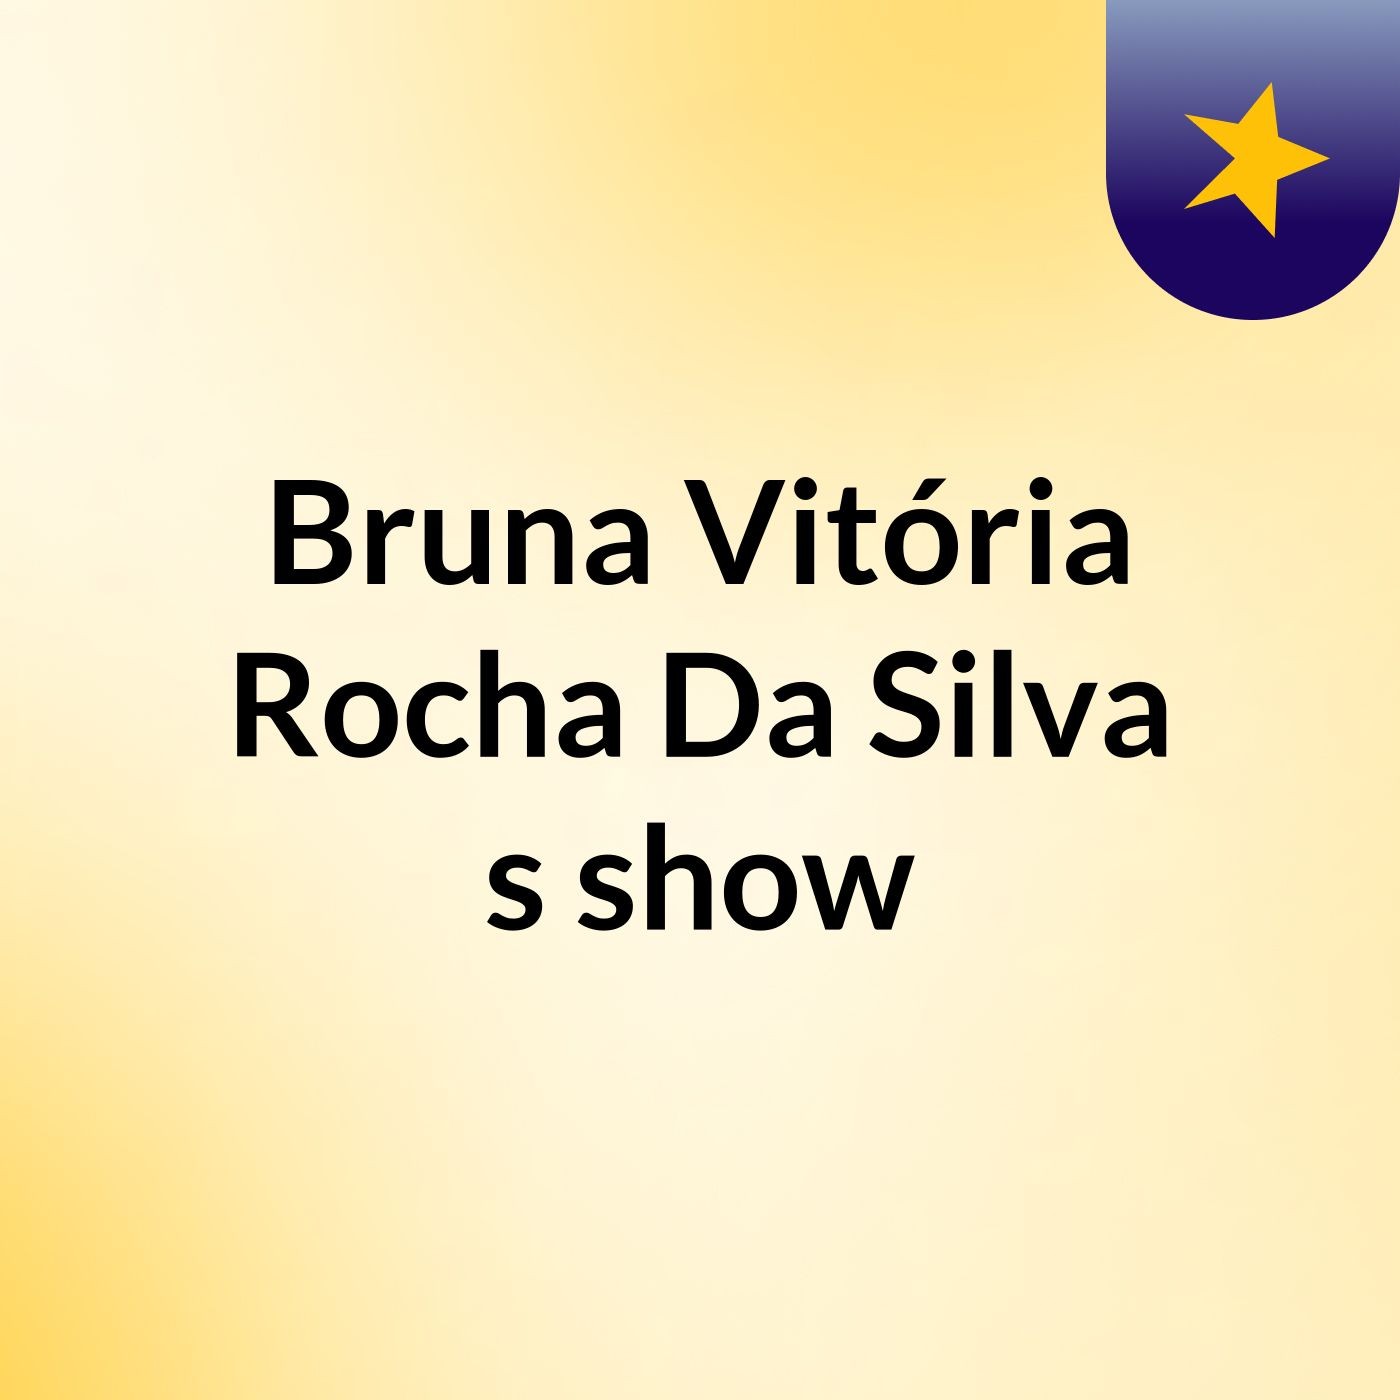 Bruna Vitória Rocha Da Silva's show